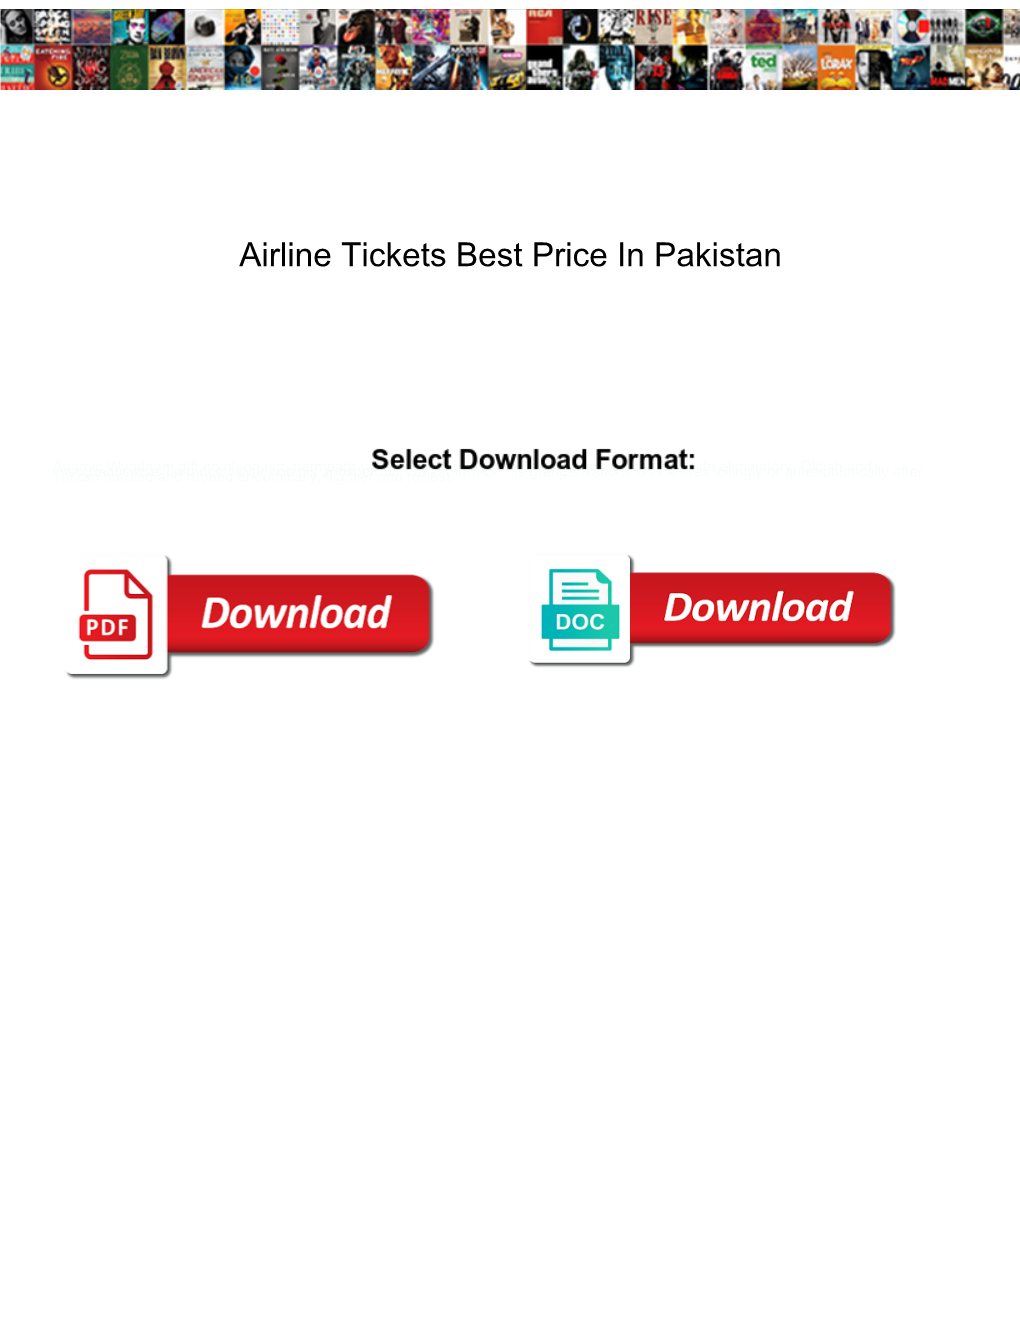 Airline Tickets Best Price in Pakistan